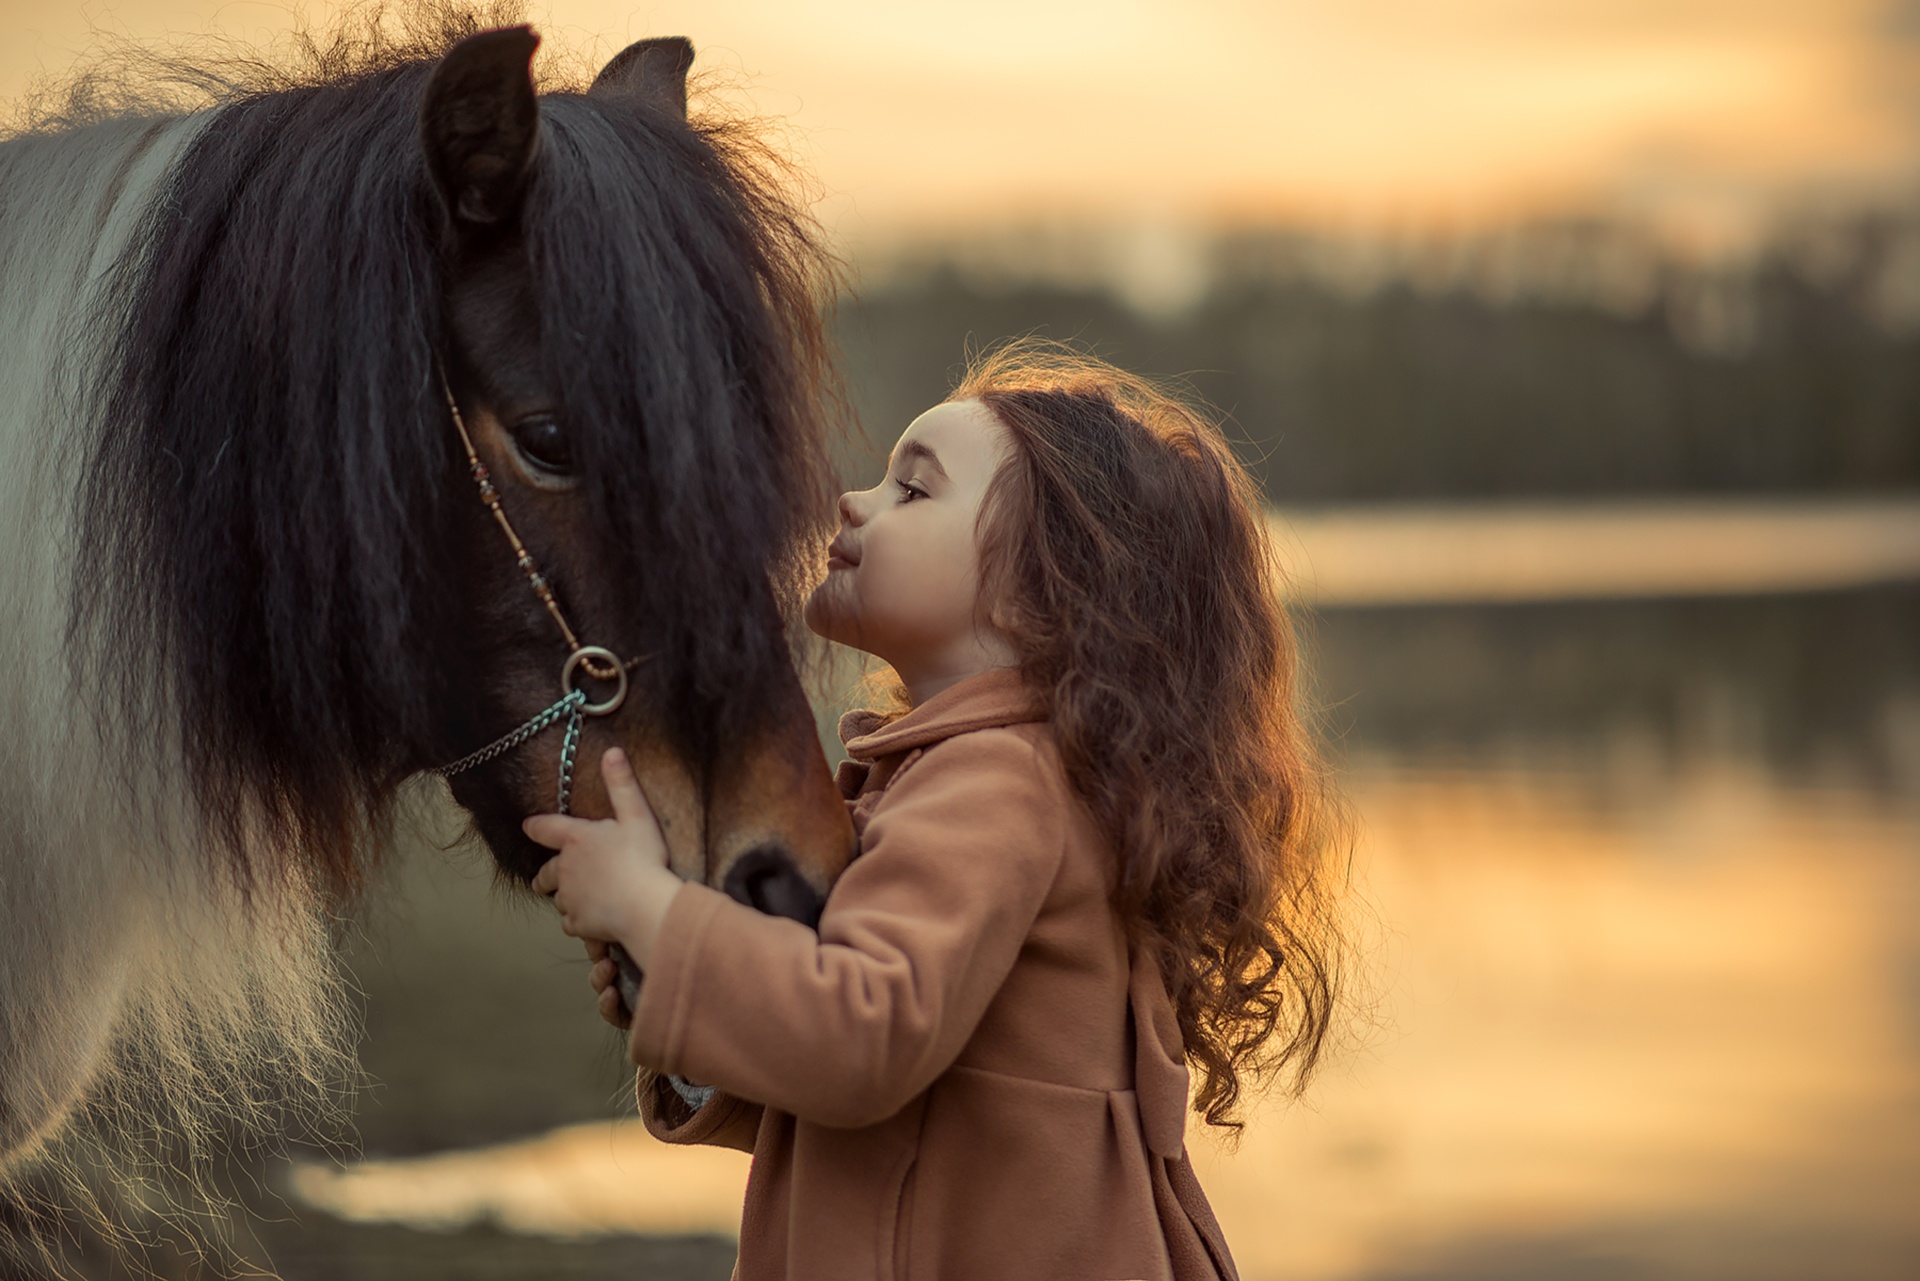 Ребенок обнимает лошадь